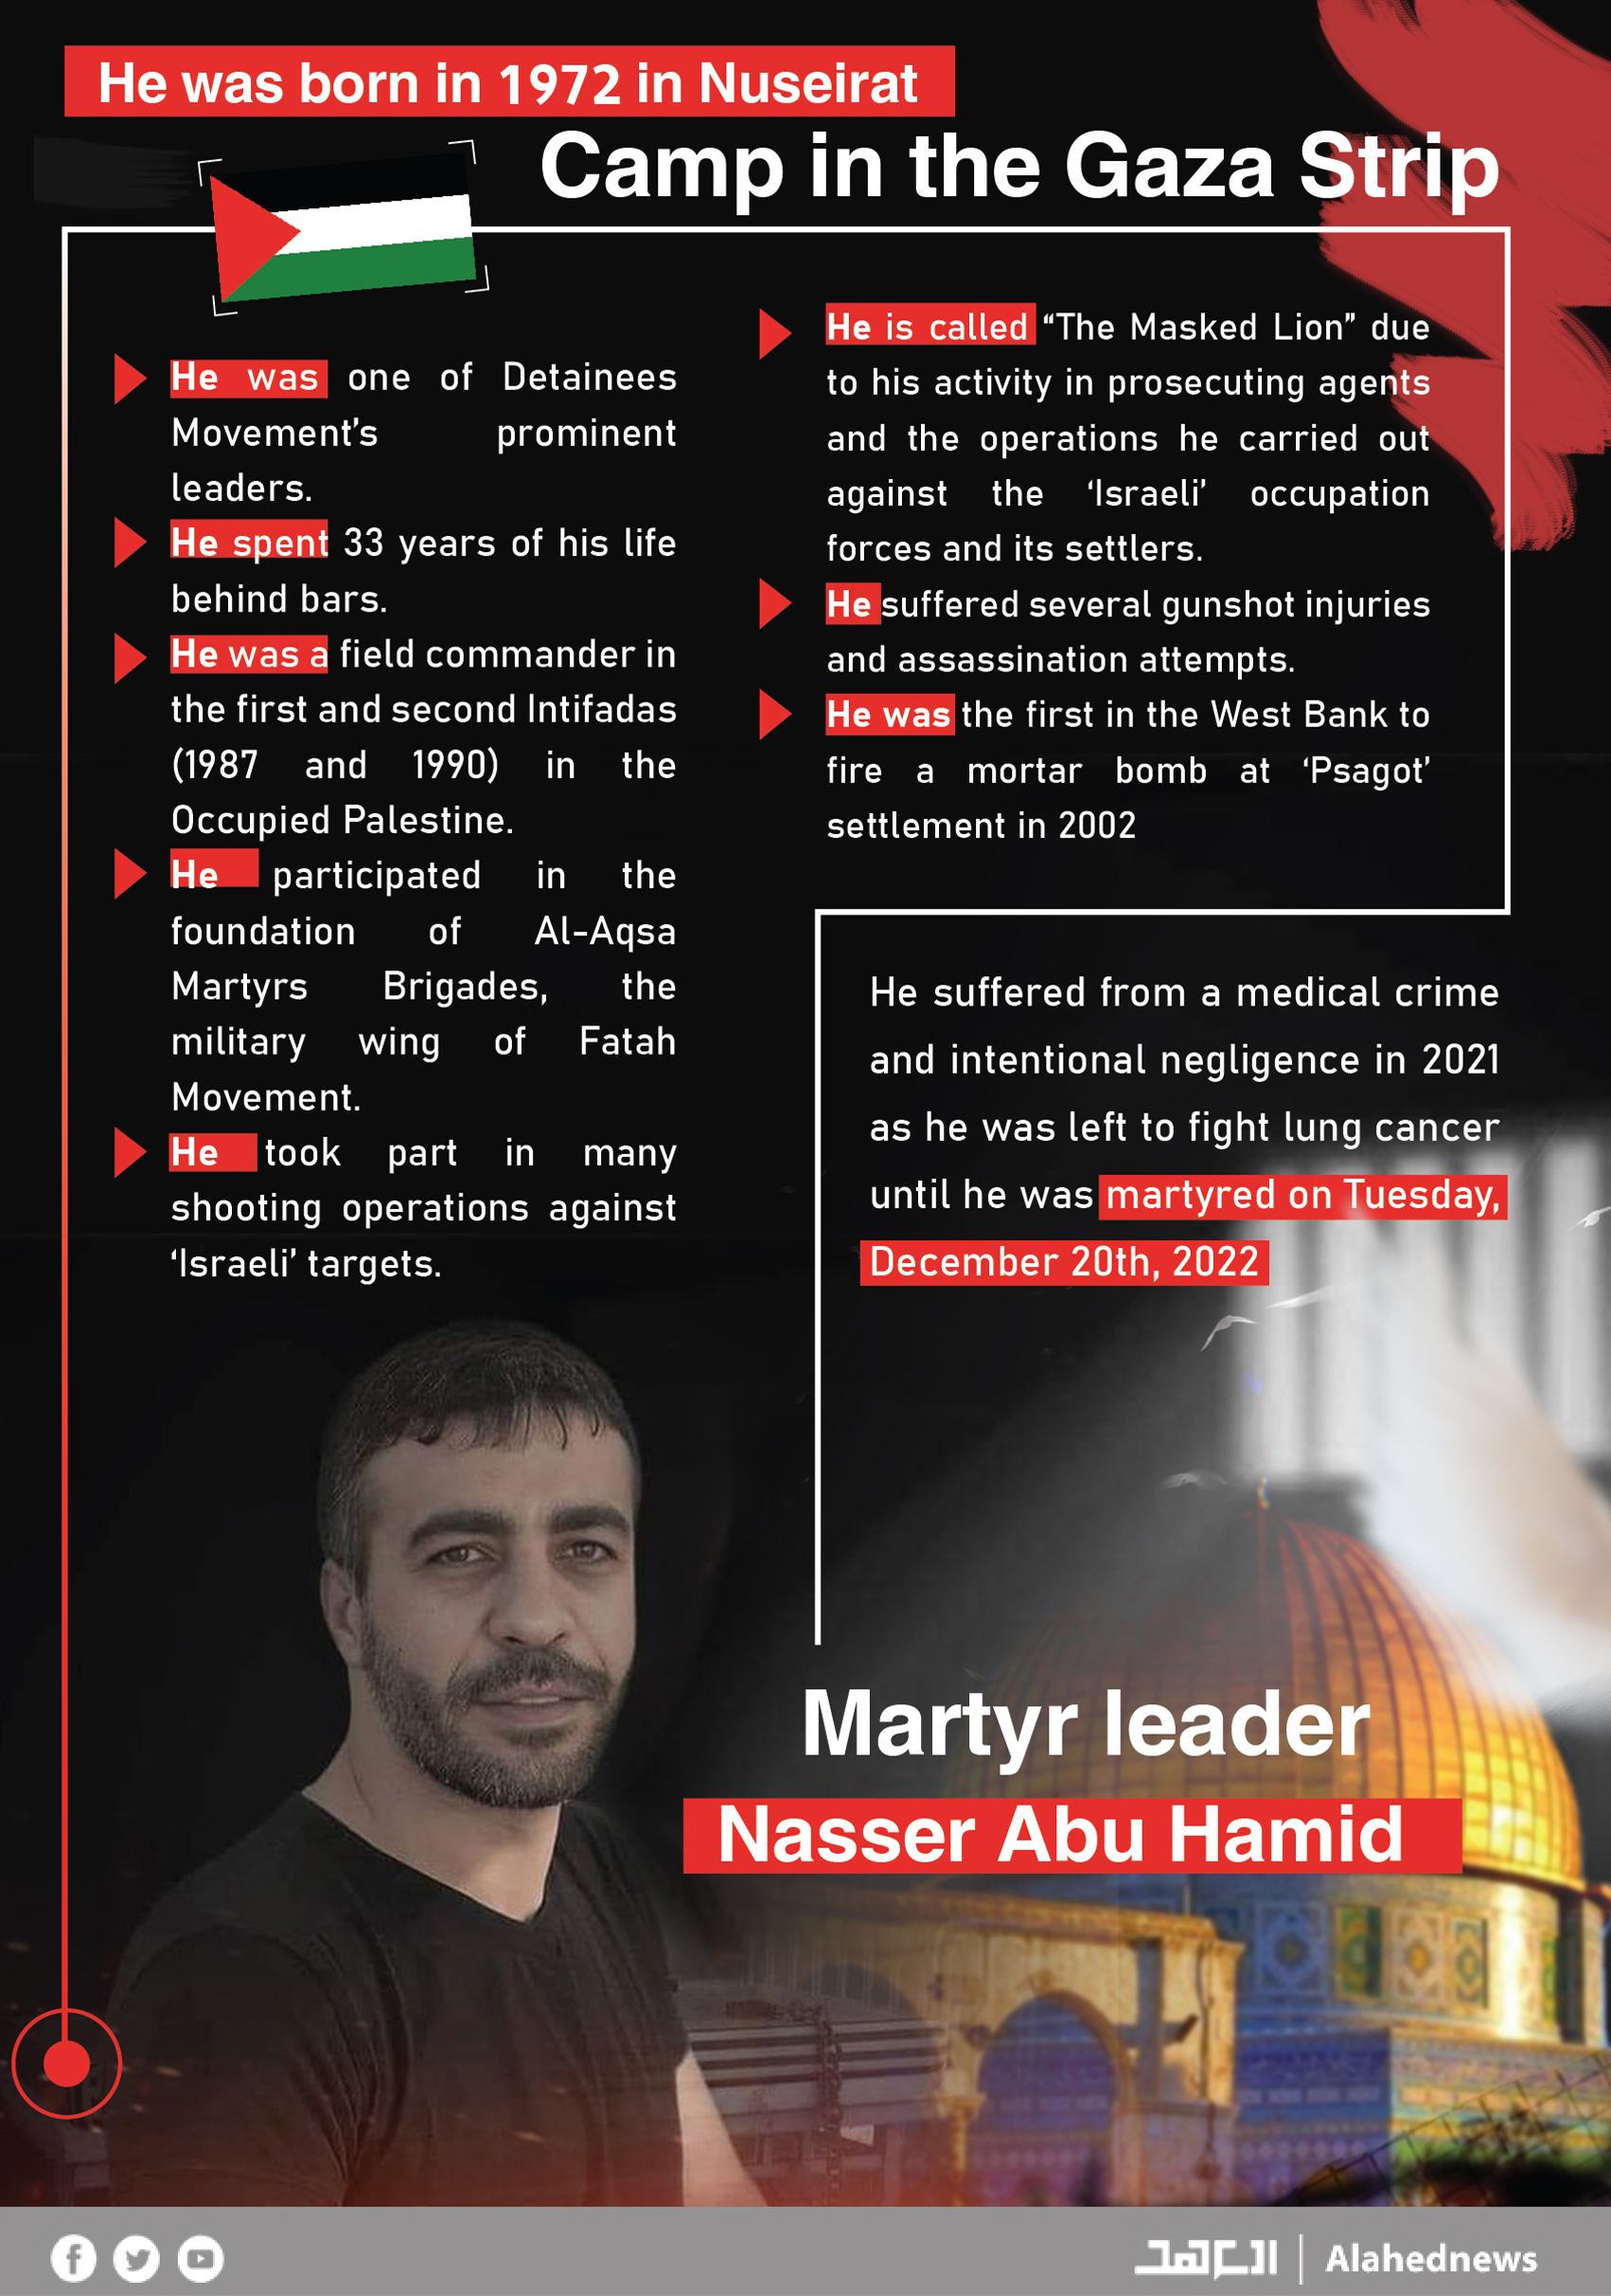 Nasser Abu Hamid: From Birth to Martyrdom